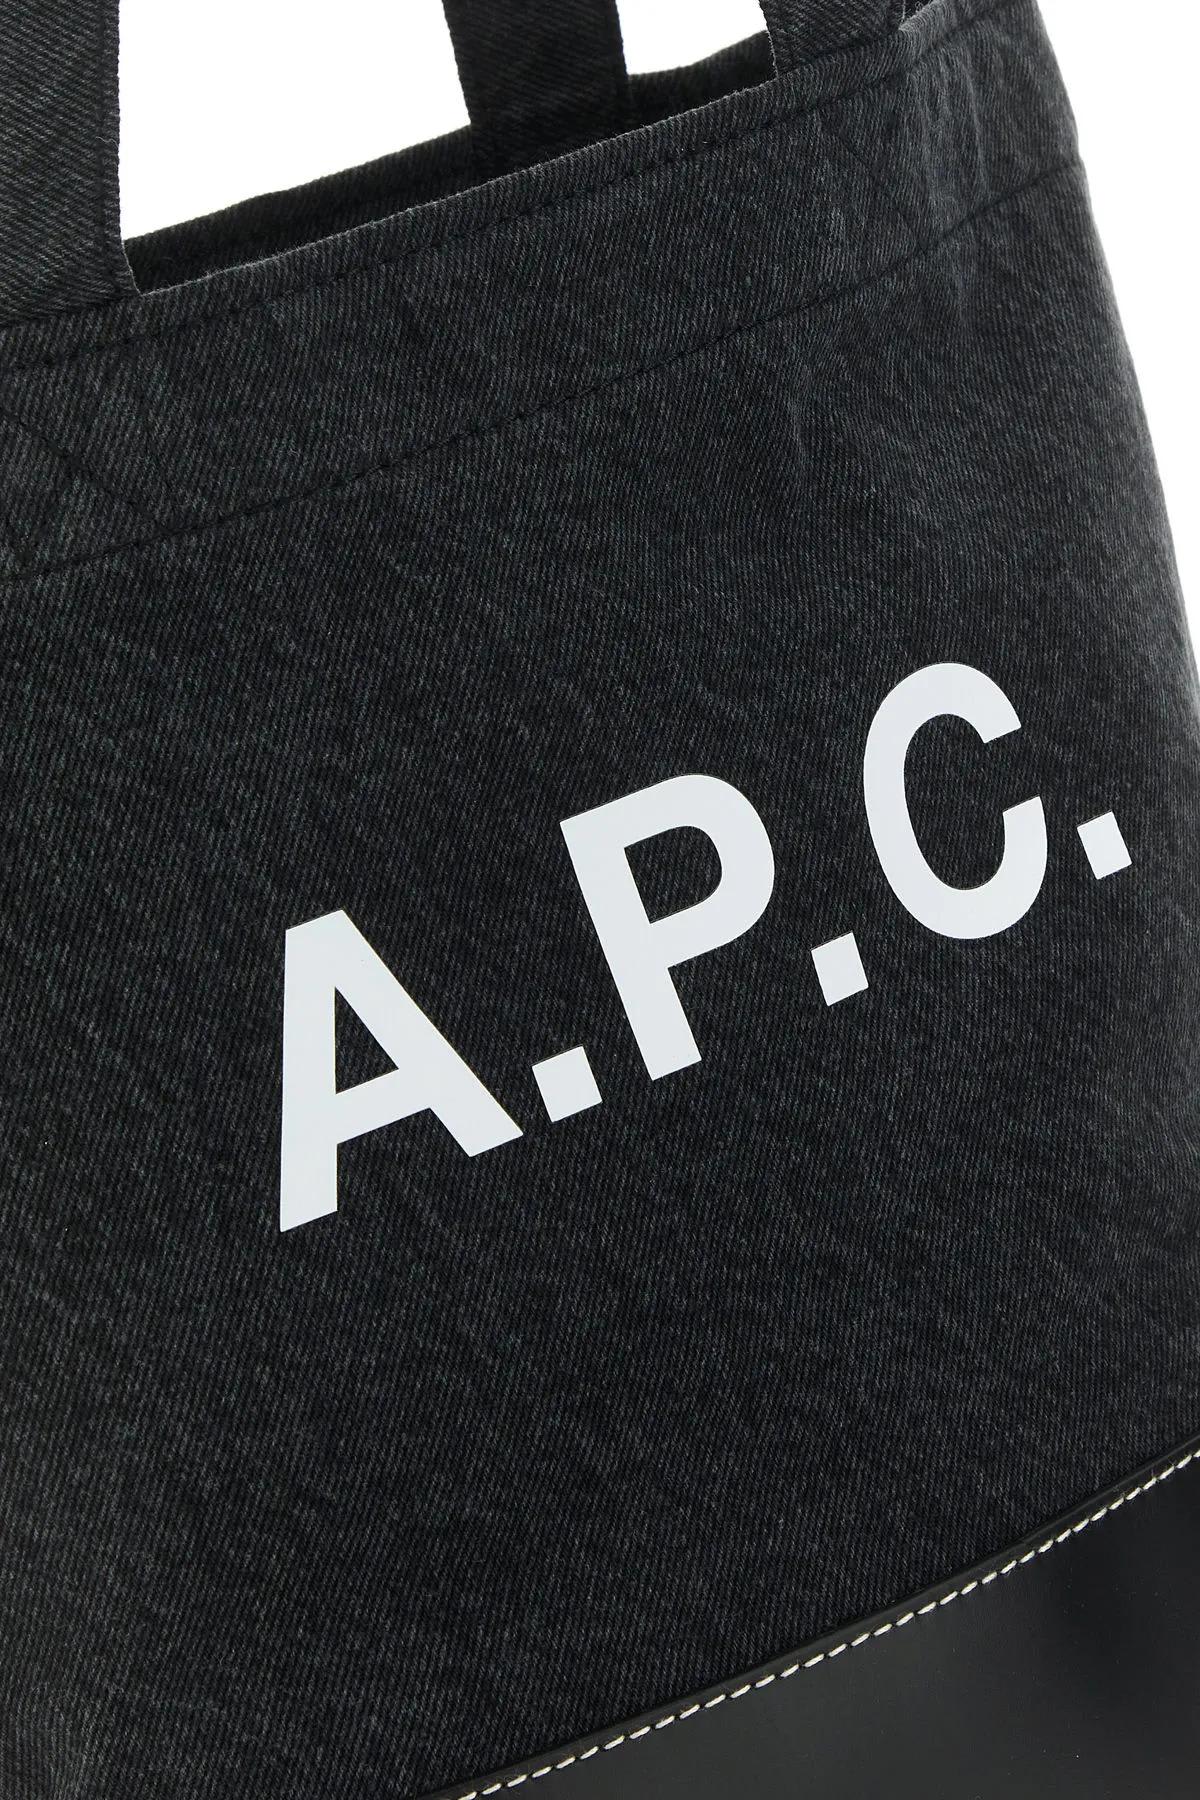 Shop Apc Black Denim And Leather Shopping Bag A.p.c.